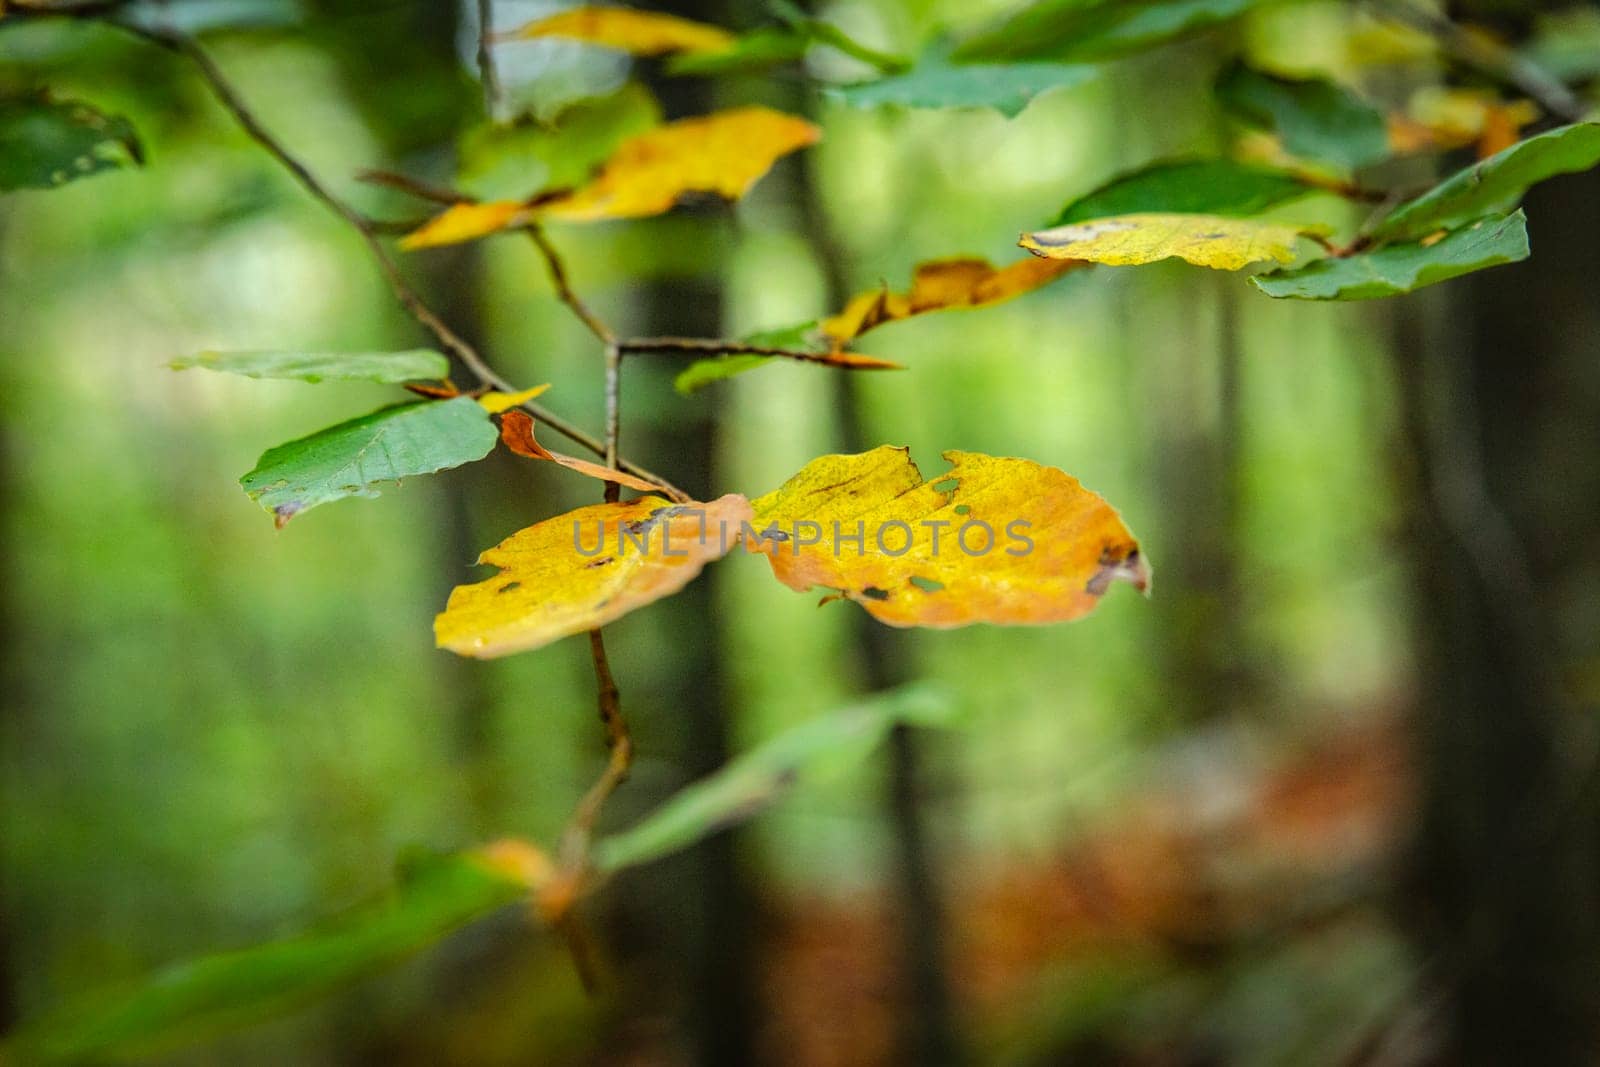 autumnal woodland leaf detail captured in a macro shot of nature